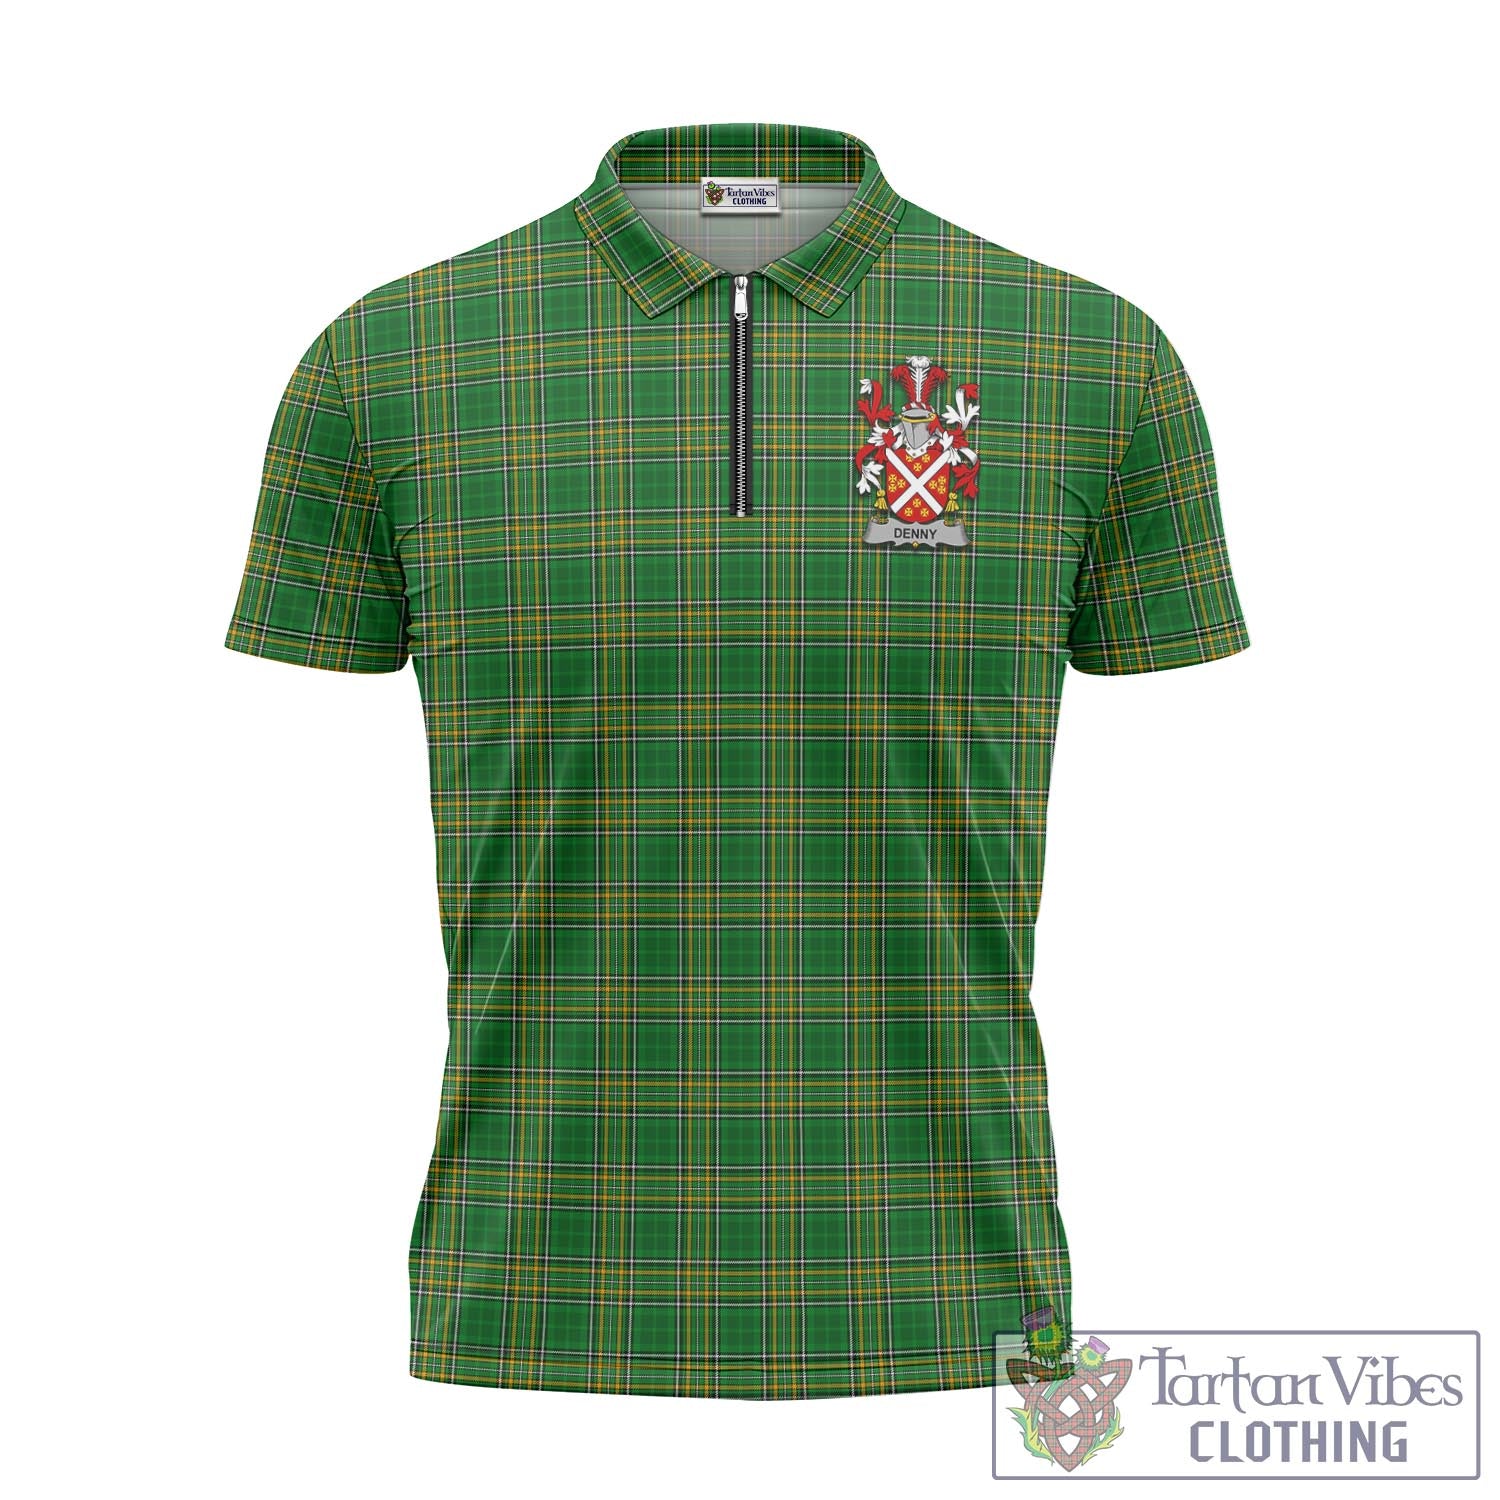 Tartan Vibes Clothing Denny Ireland Clan Tartan Zipper Polo Shirt with Coat of Arms